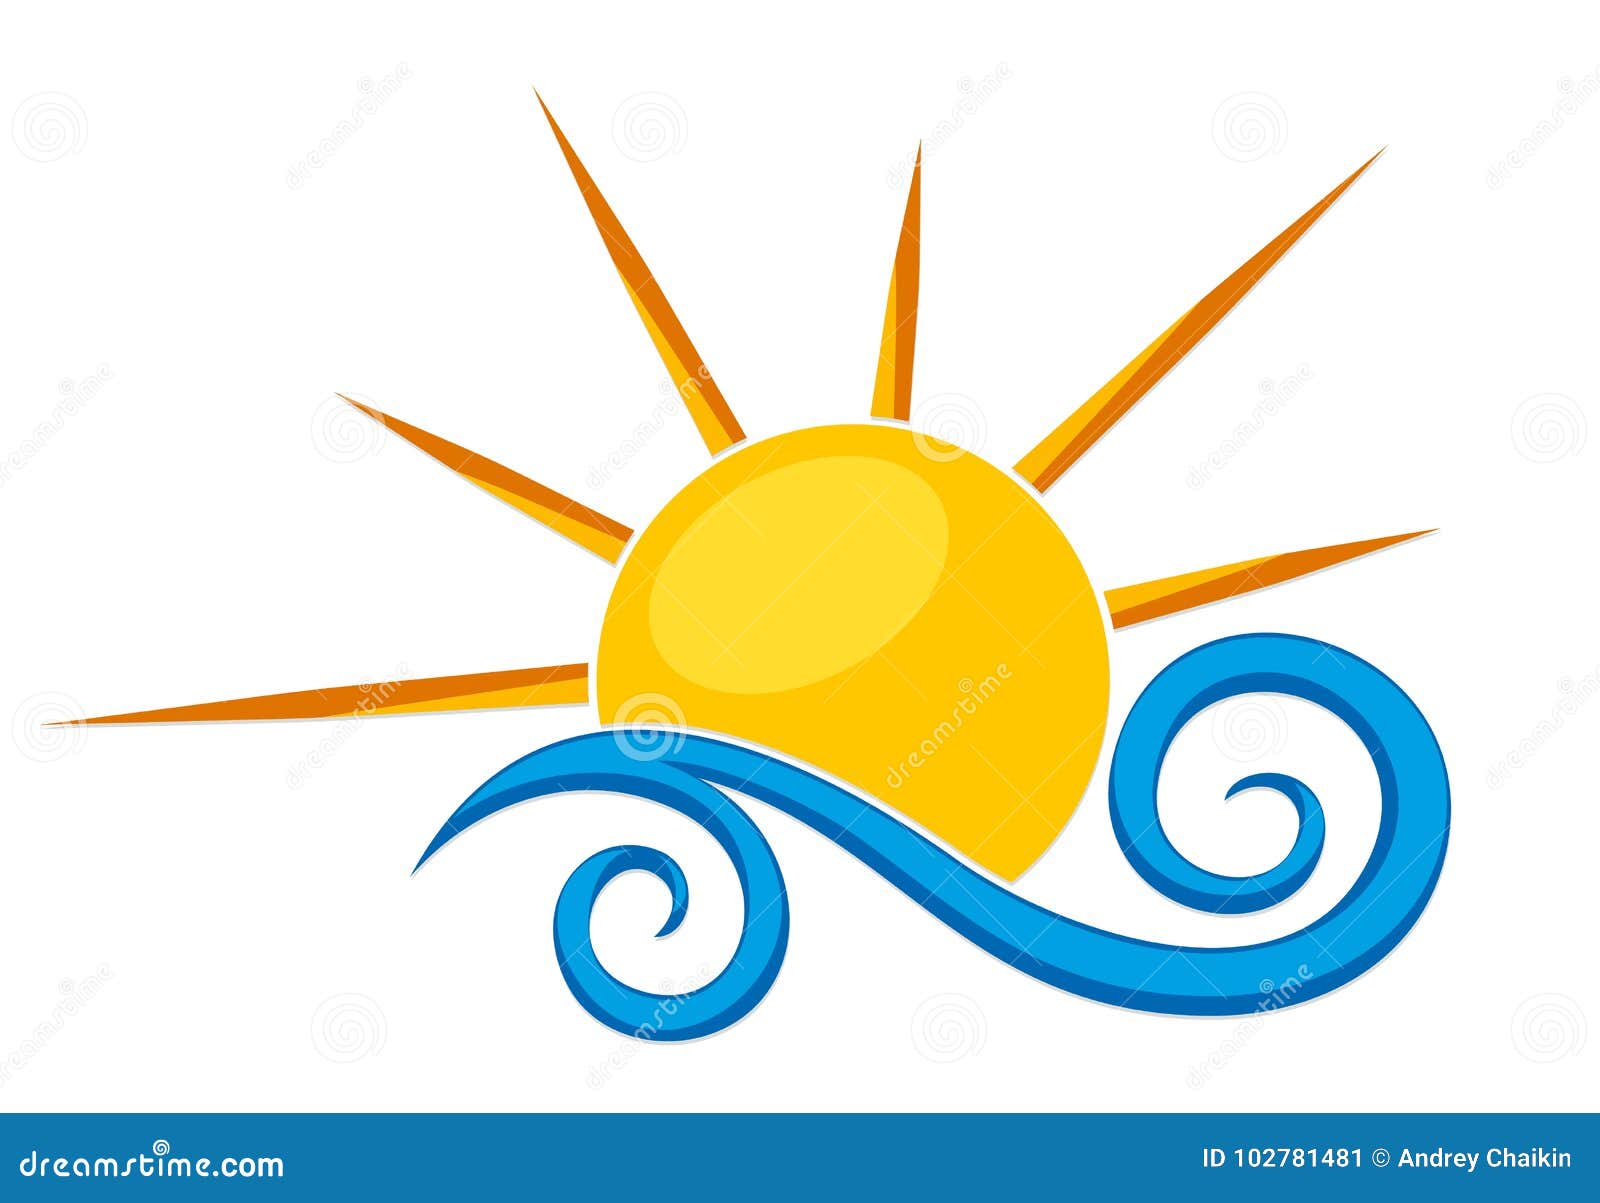 logo sun and sea.